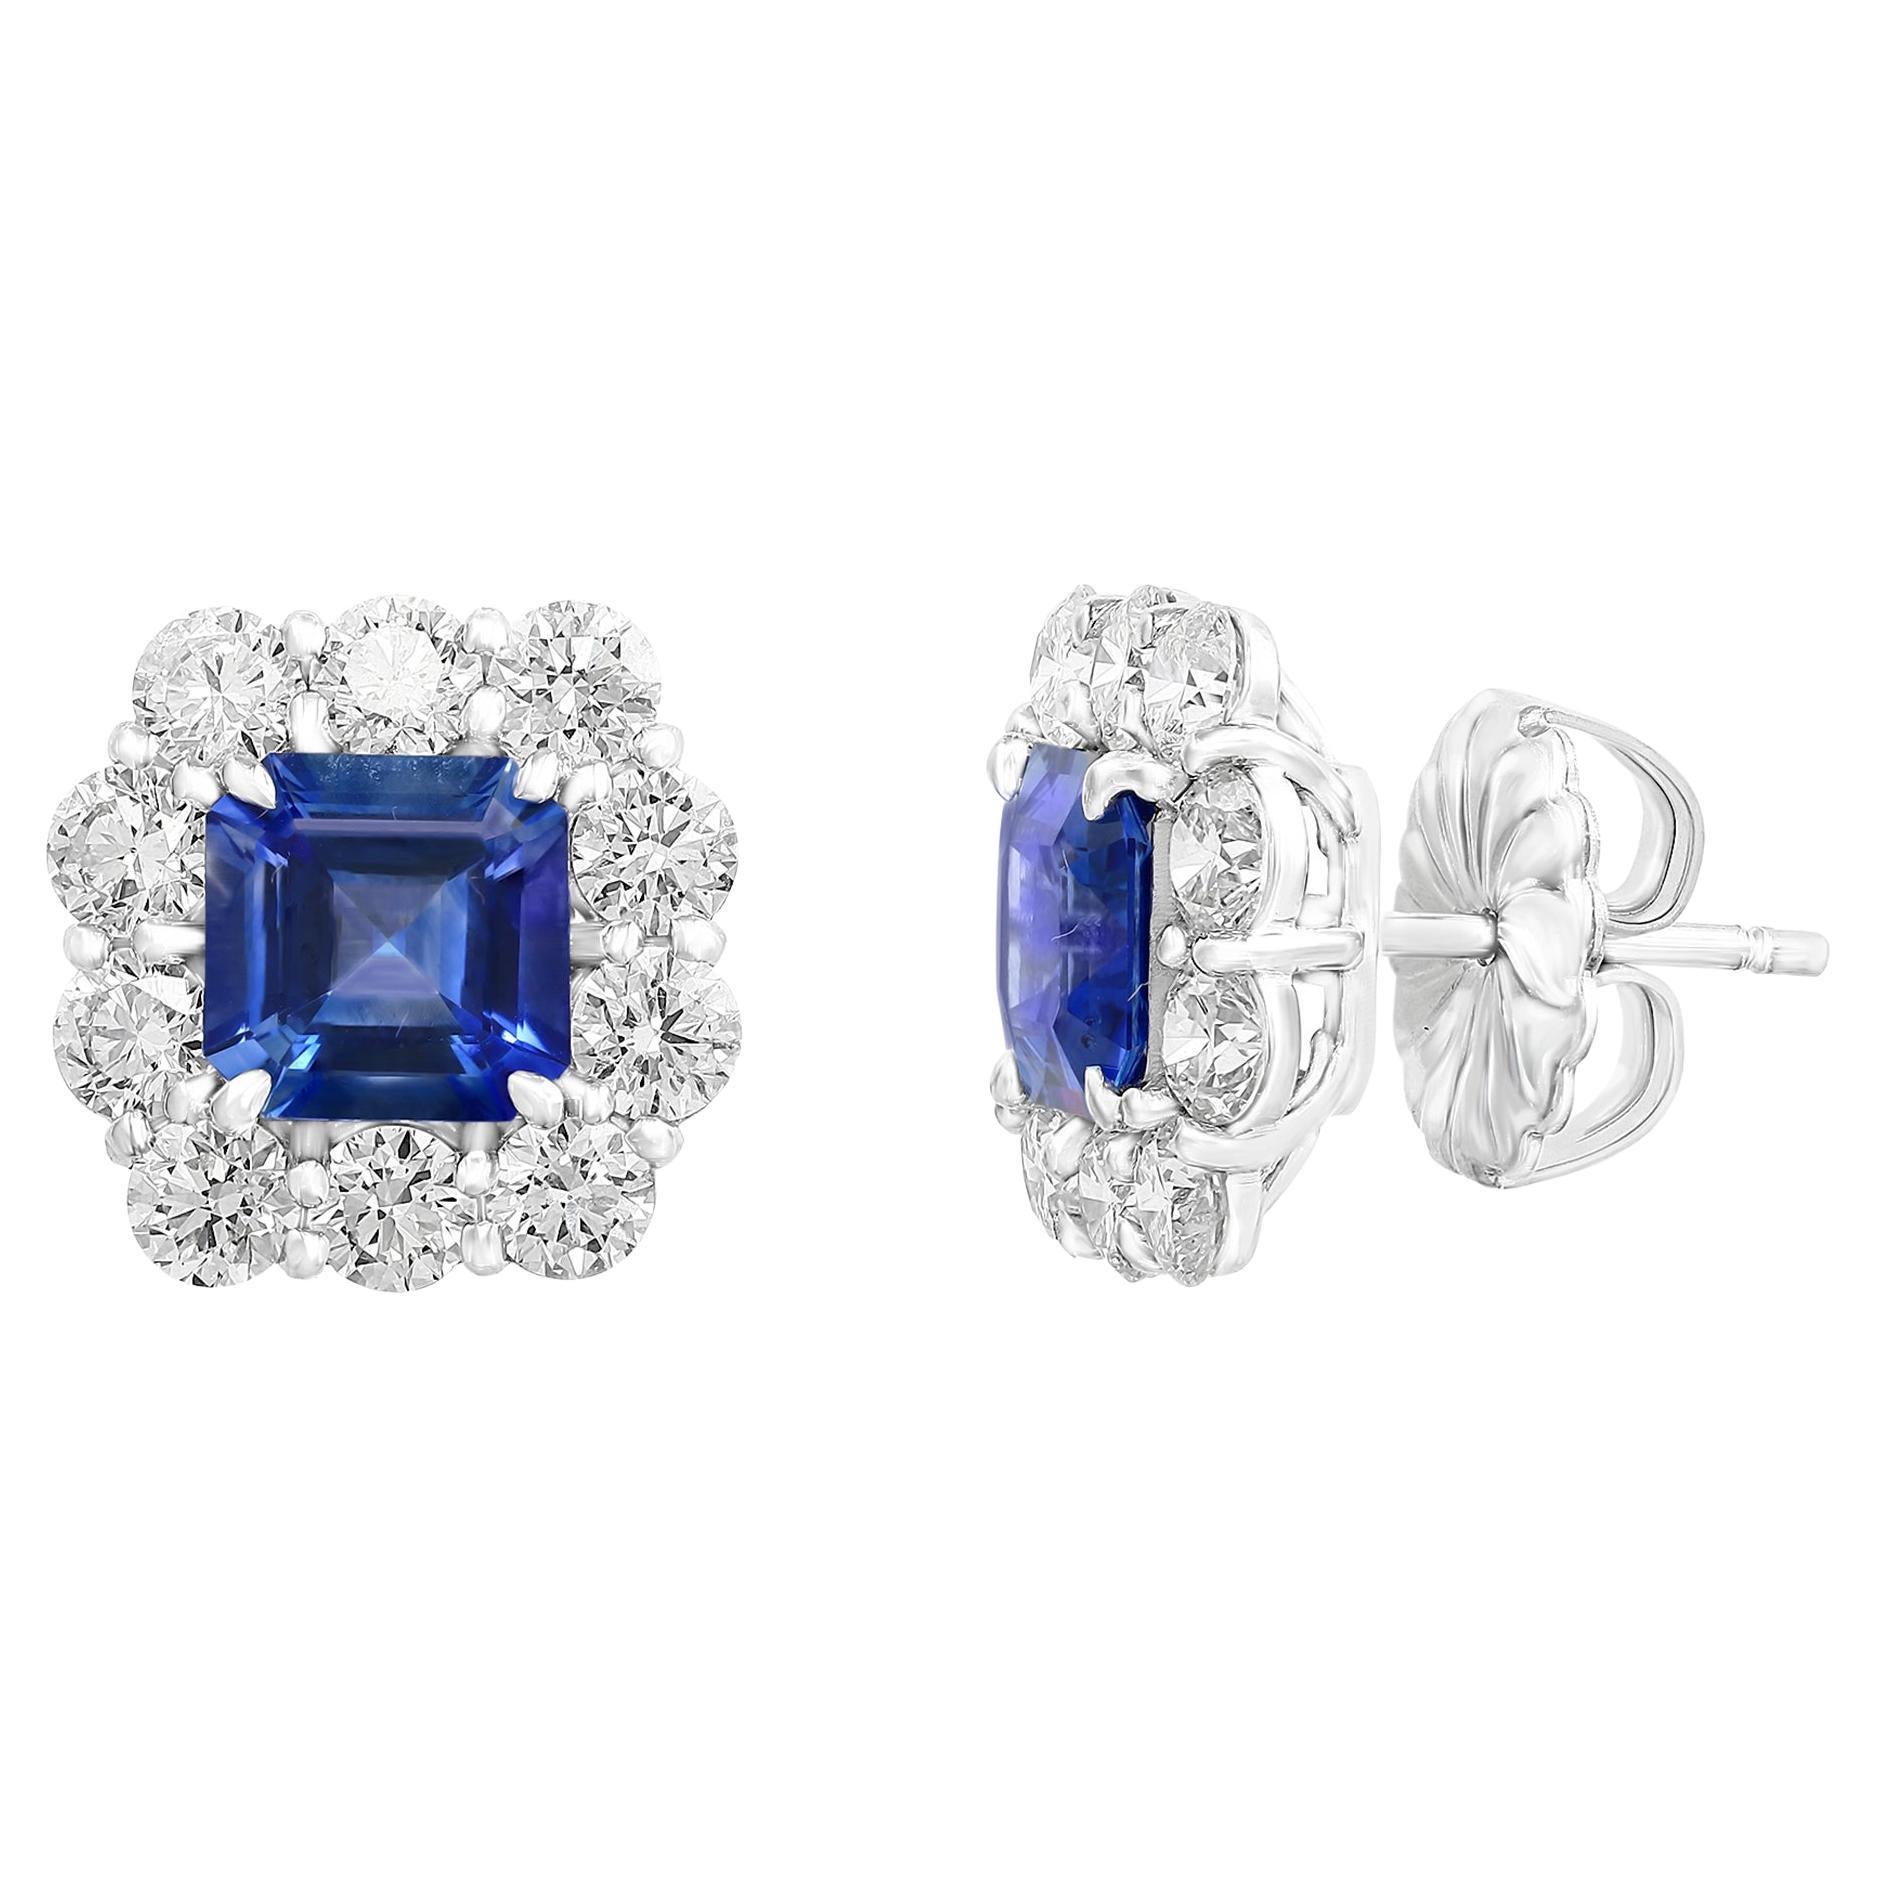 3.02 Carat Emerald Cut Blue Sapphire and Diamond Stud Earrings in 18K White Gold